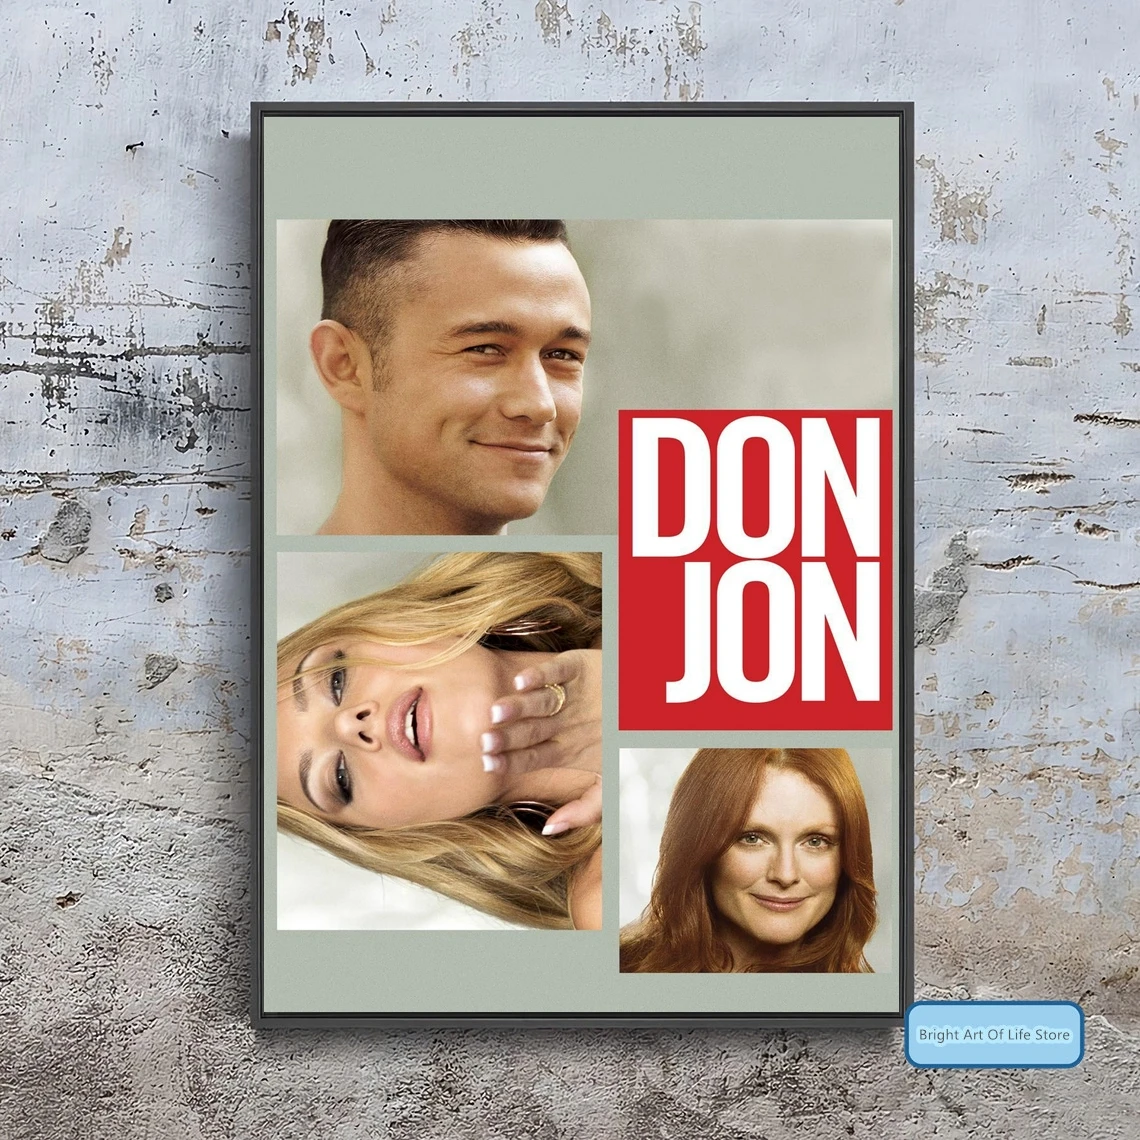 

Don Jon (2013) Movie Poster Cover Photo Canvas Print Wall Art Home Decor (Unframed)